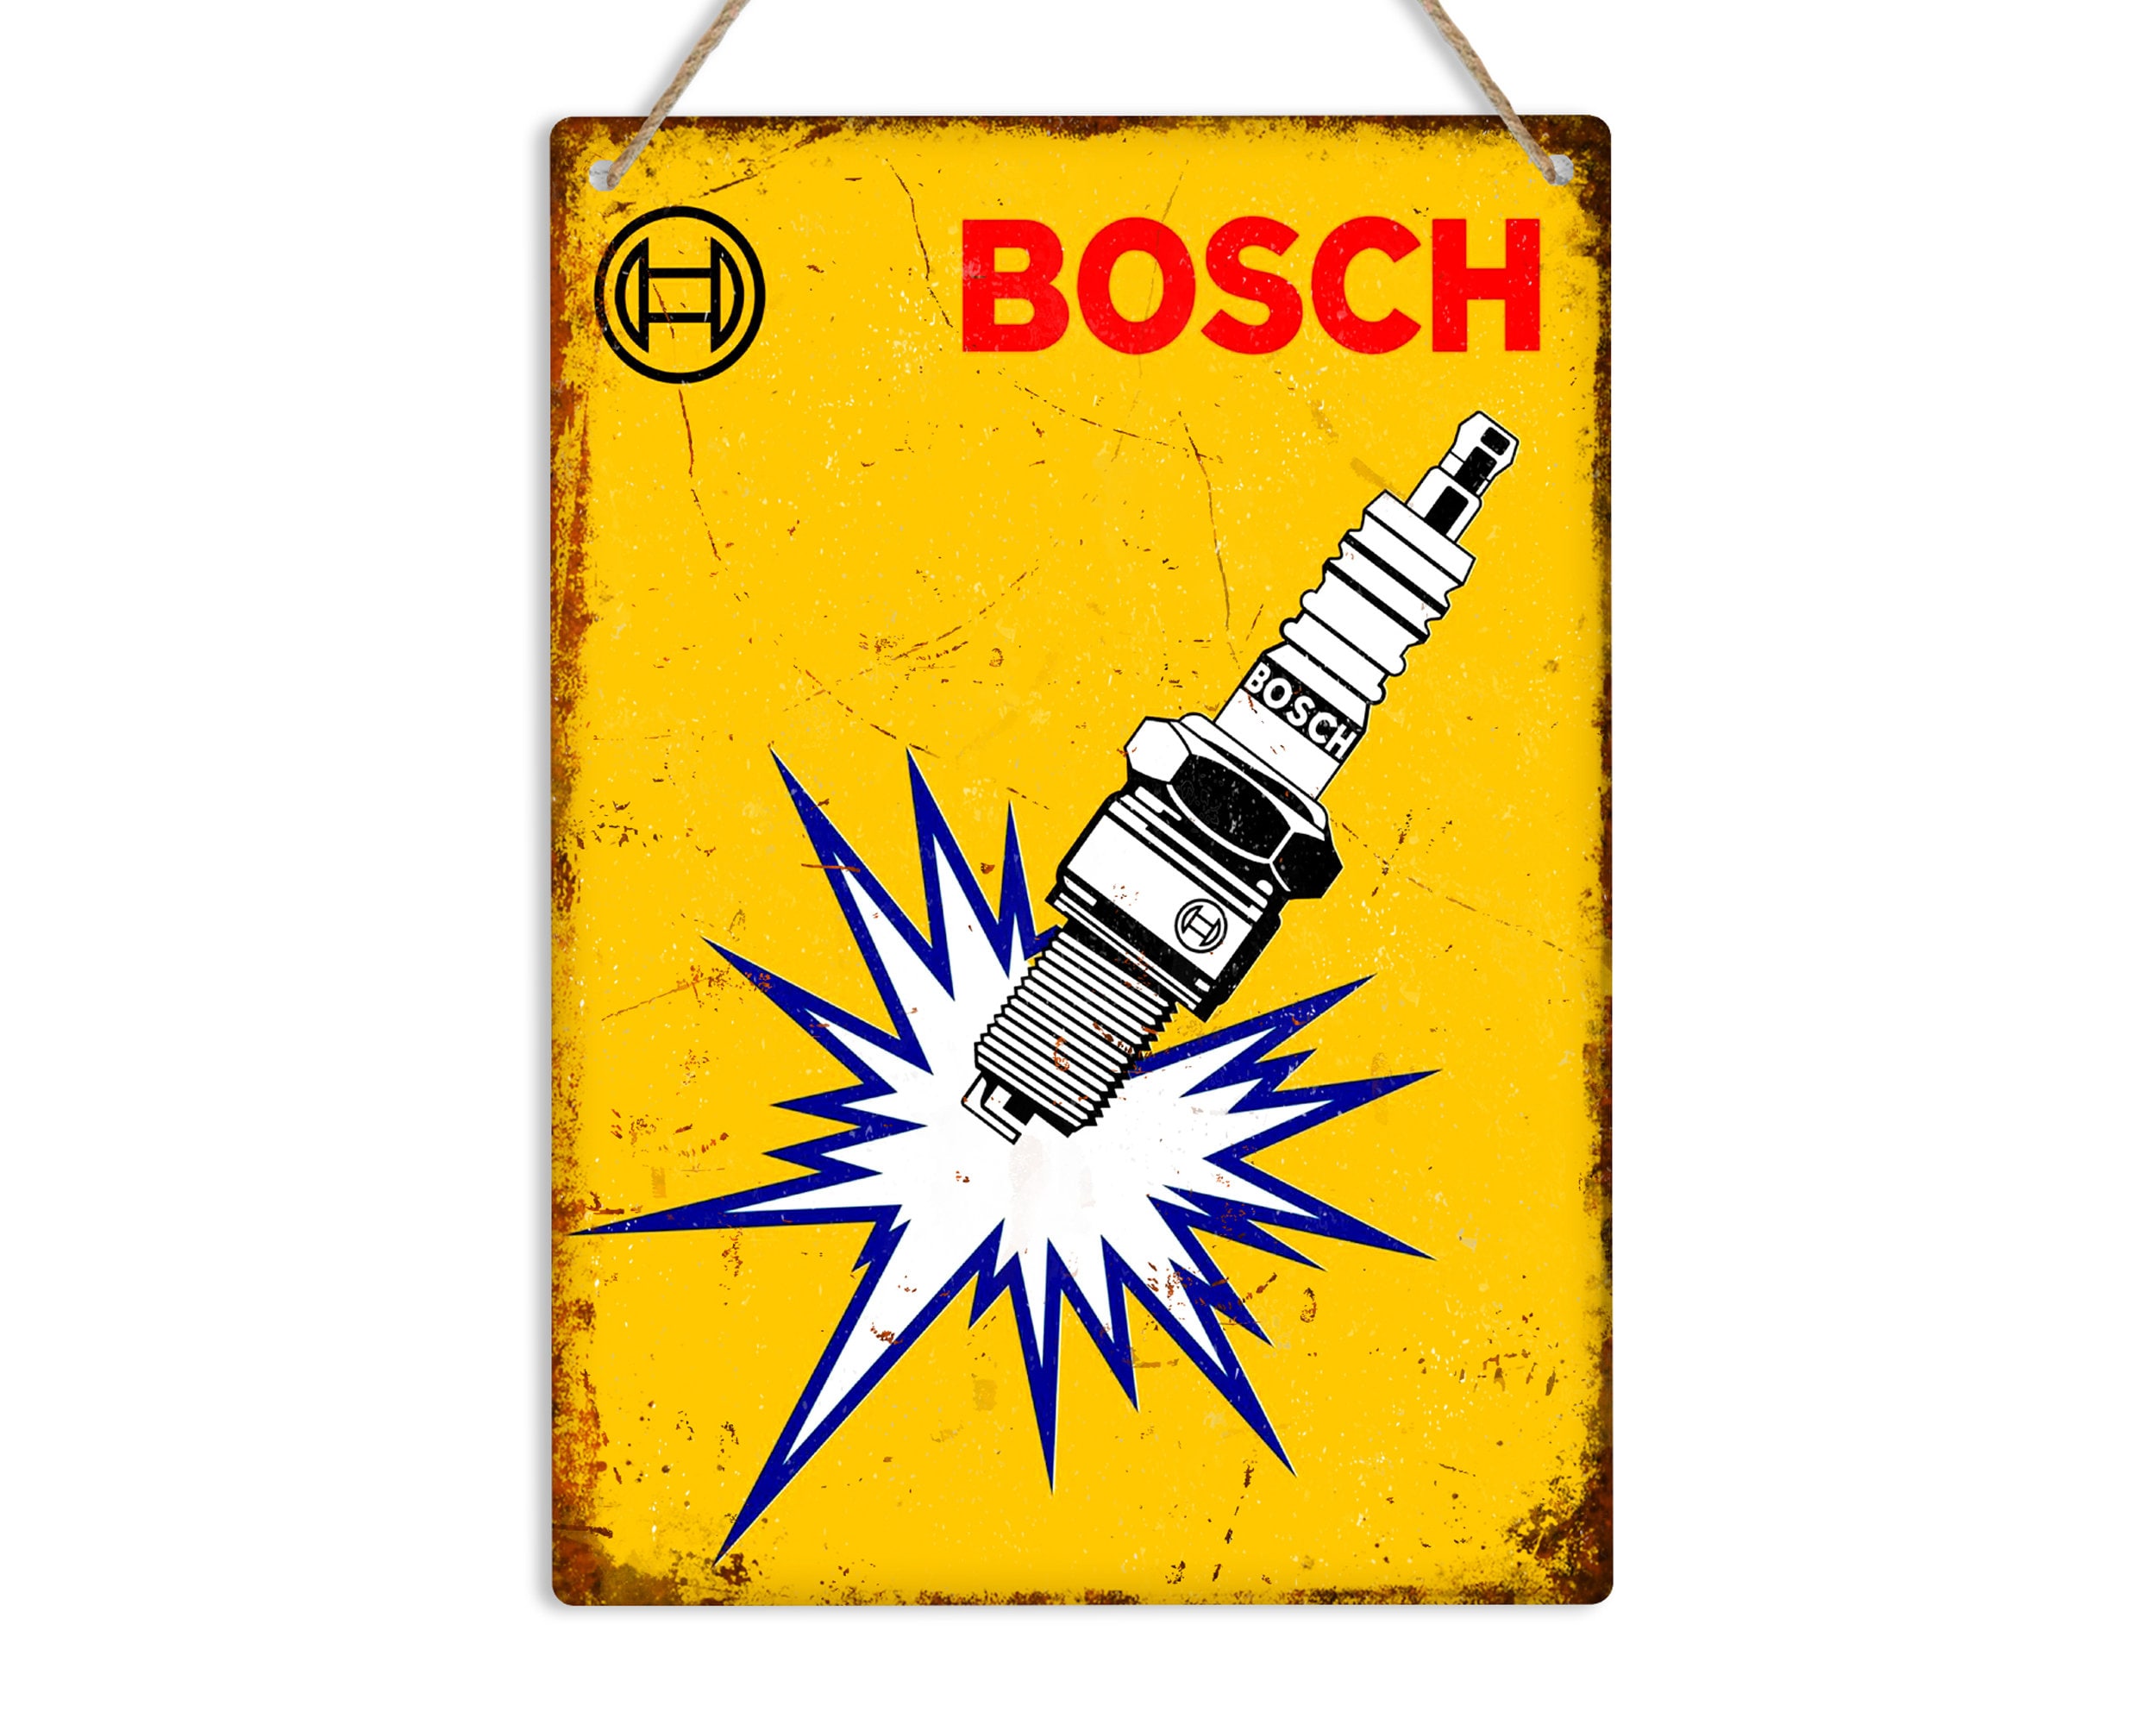 Bosch spark plug Sticker by Zao-Ding